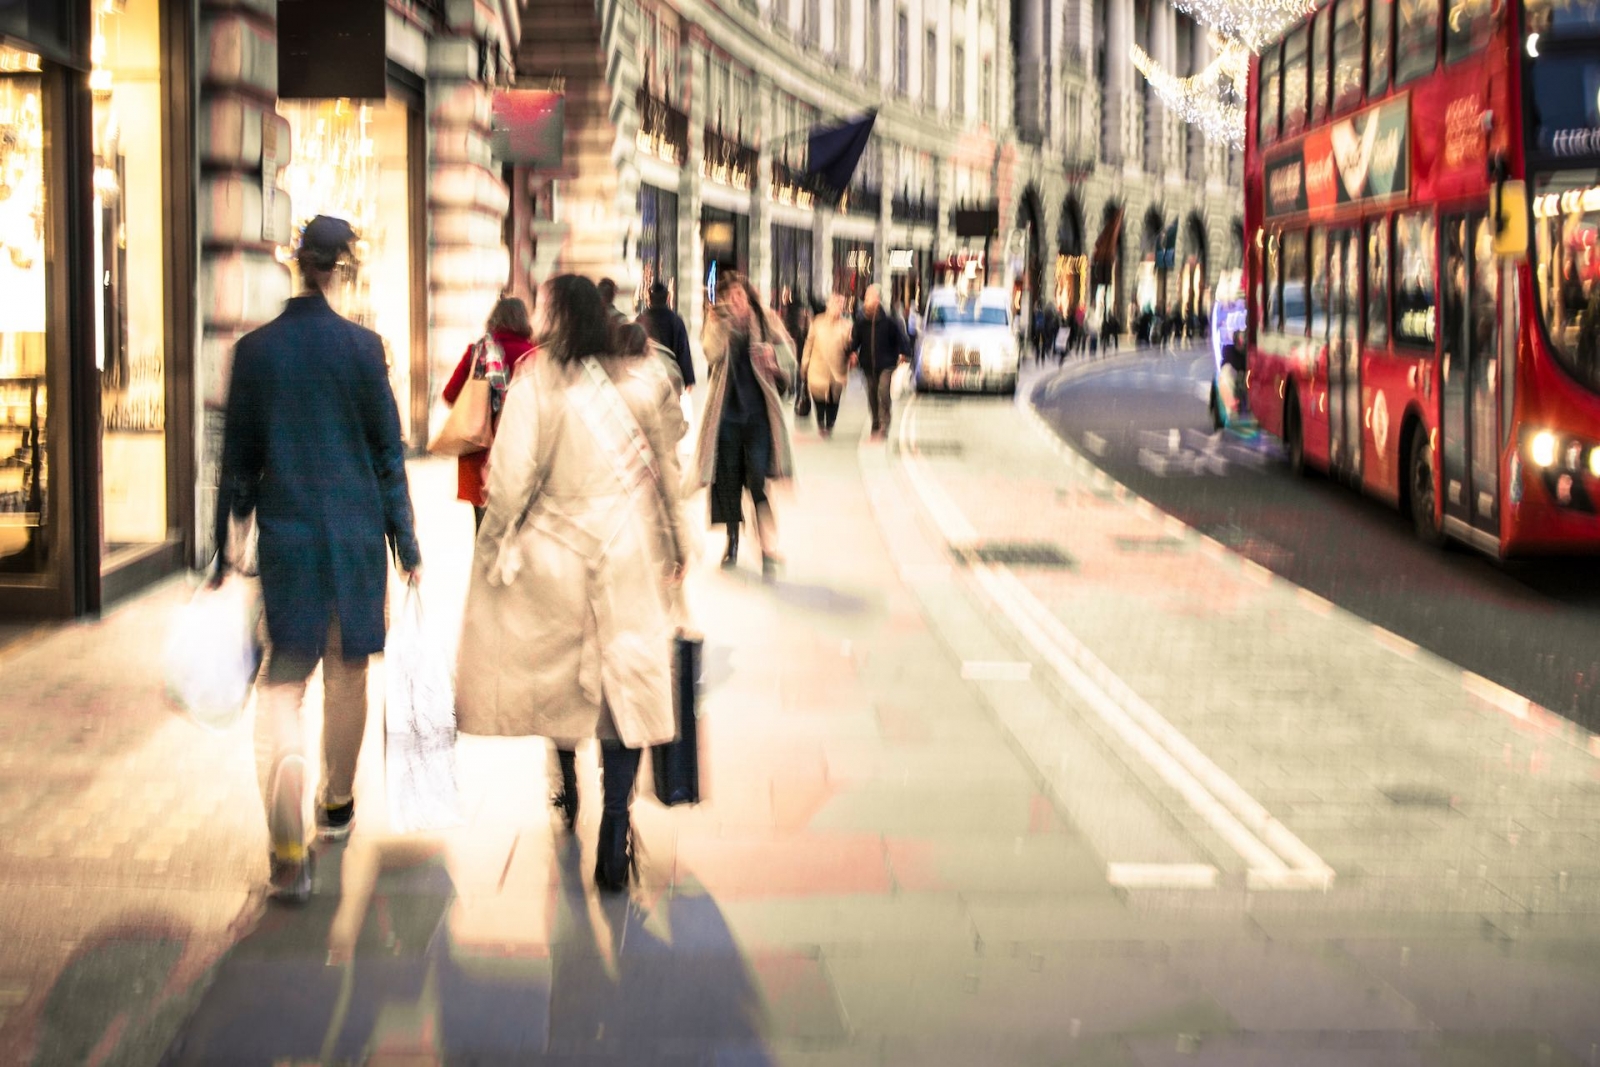 Blurred shopping street scene in London